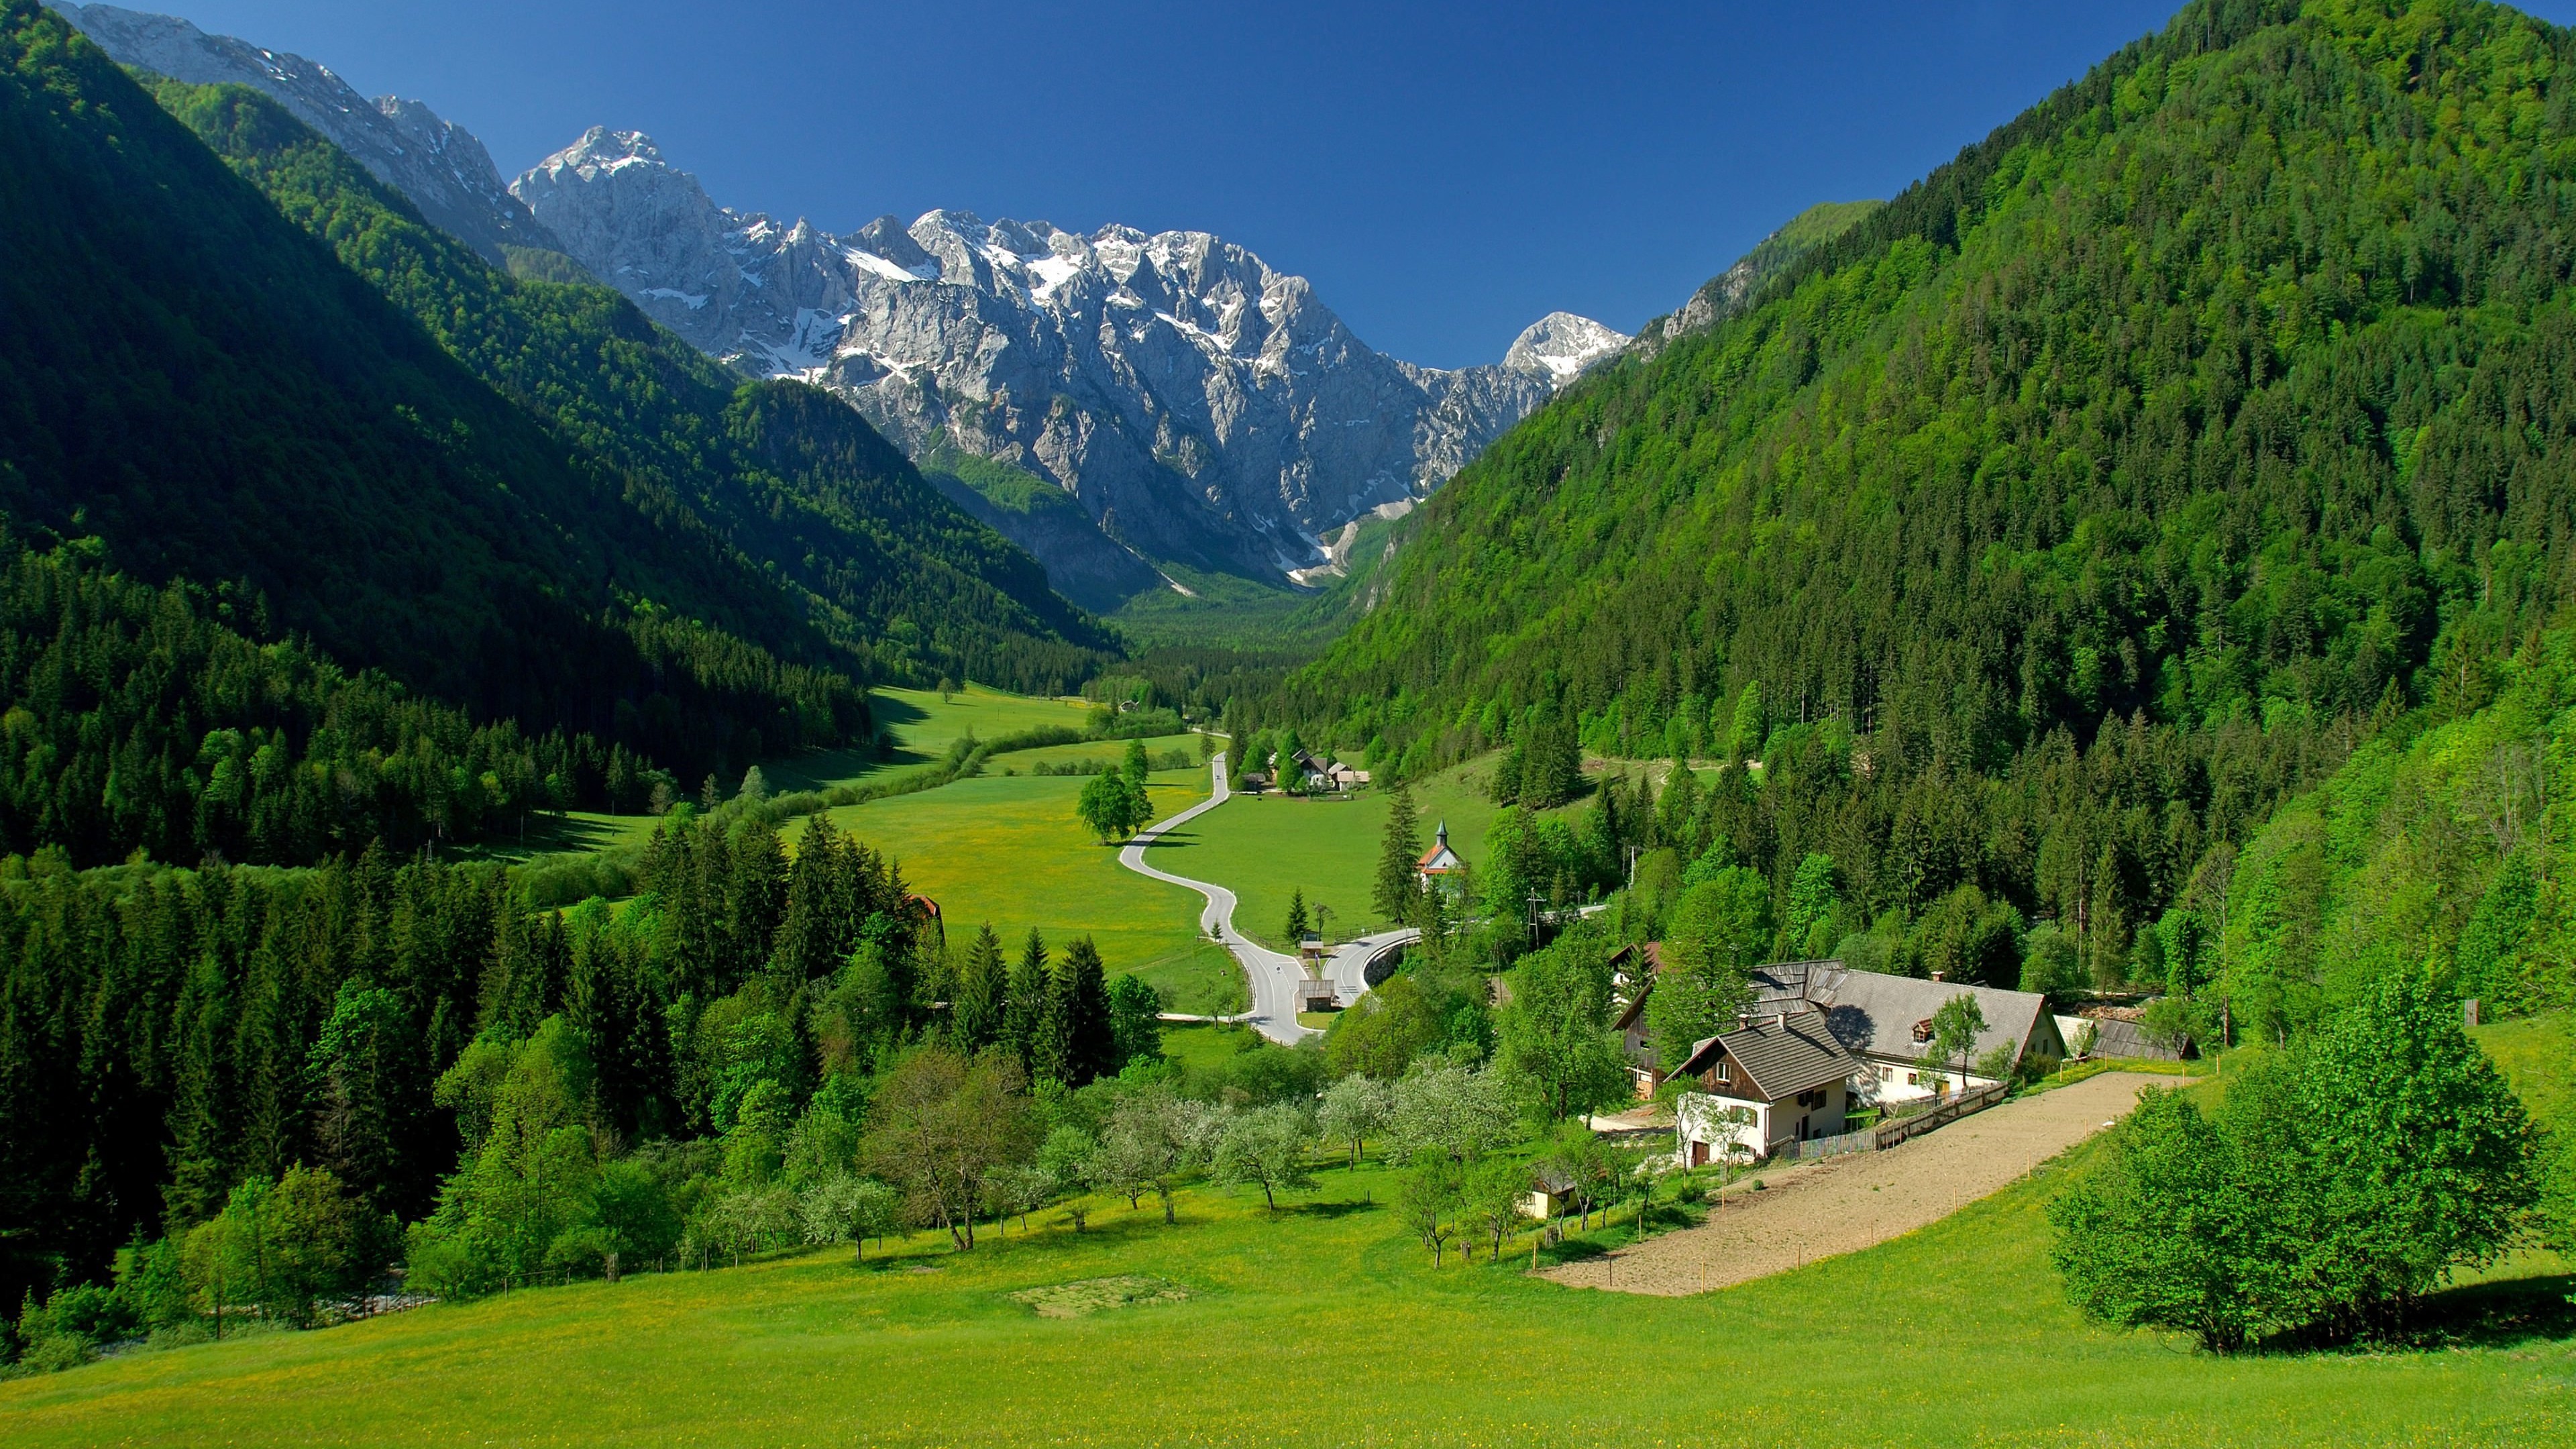 Spring In The Alpine Valley Wallpaper for Desktop 4K 3840x2160